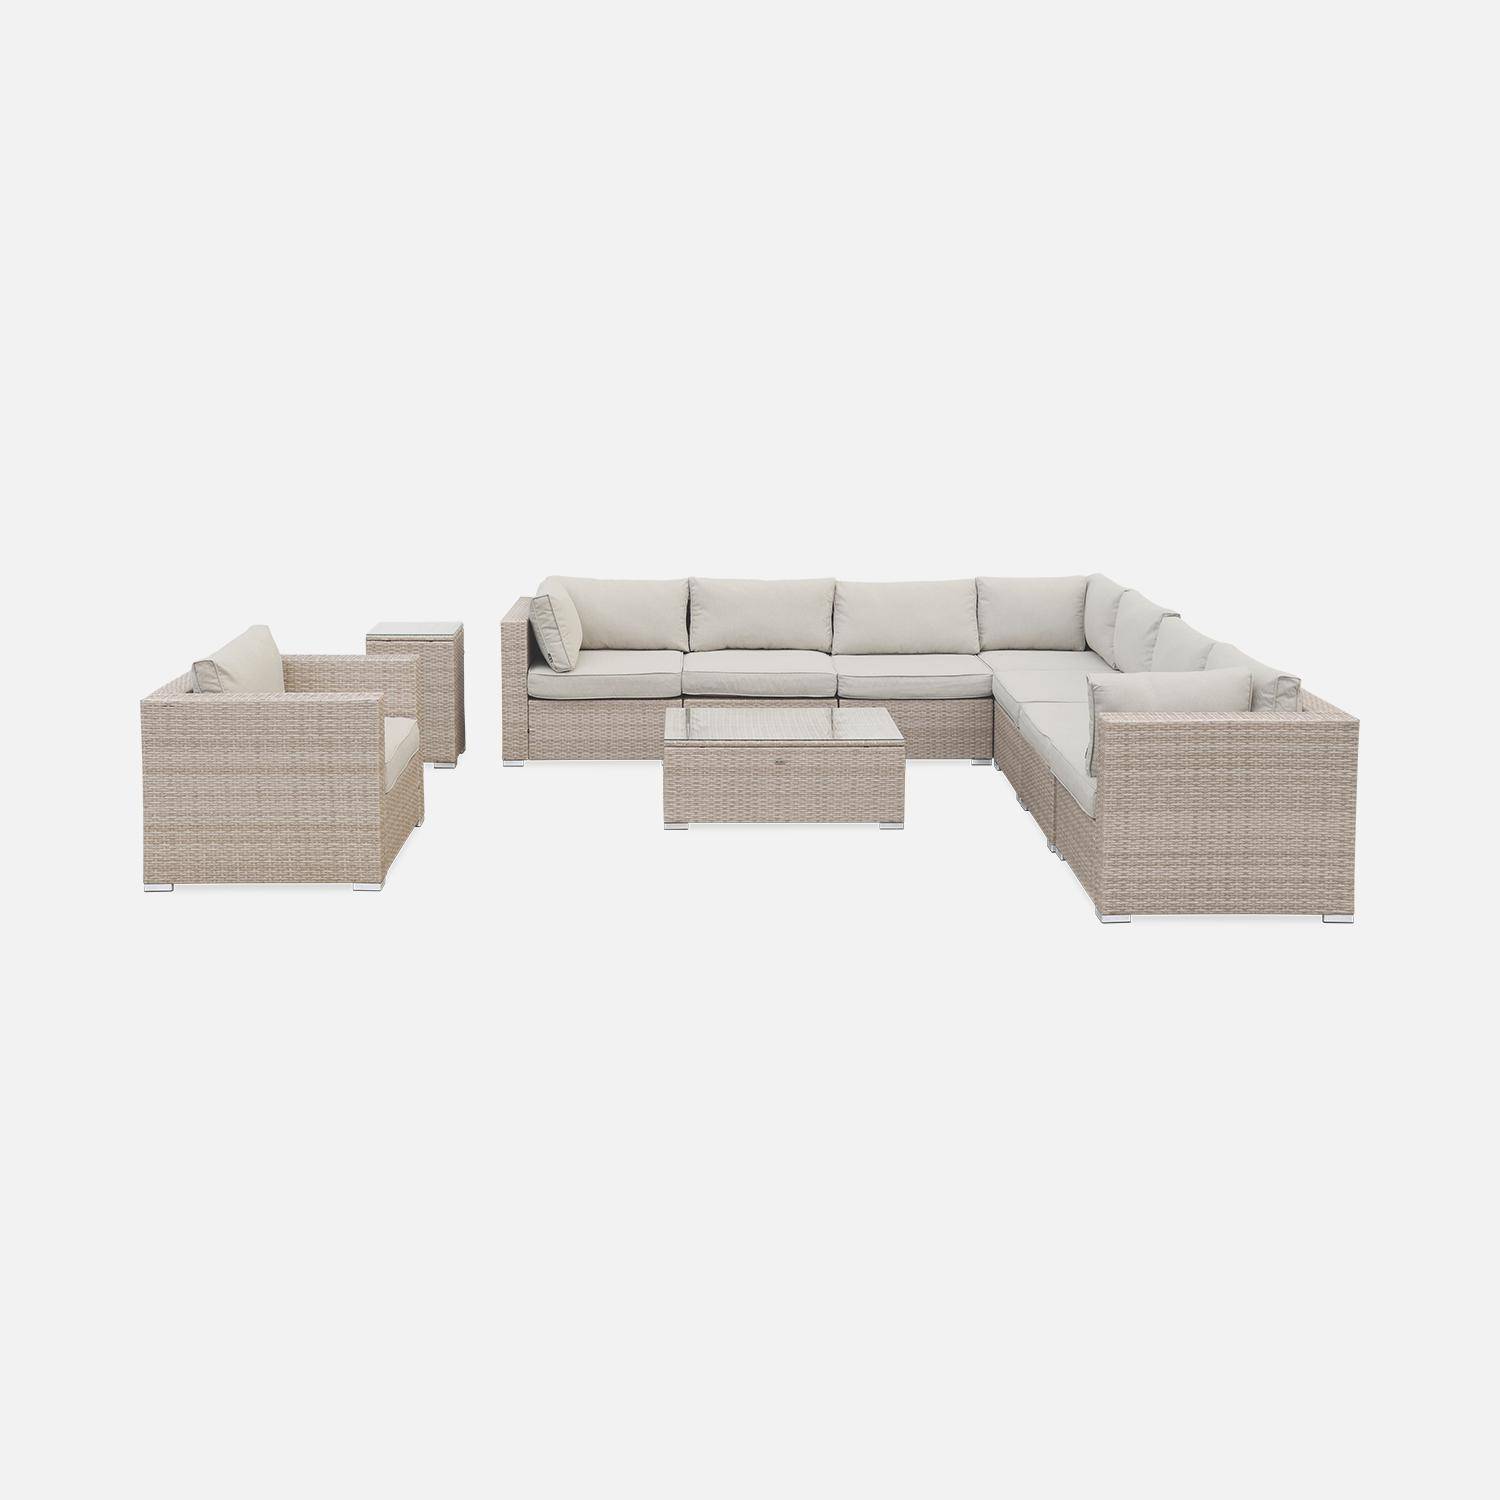 Sofa de jardin, conjunto sofa de exterior, rattan sintetico, resina trenzada - Beije, 8-10 plazas Photo4